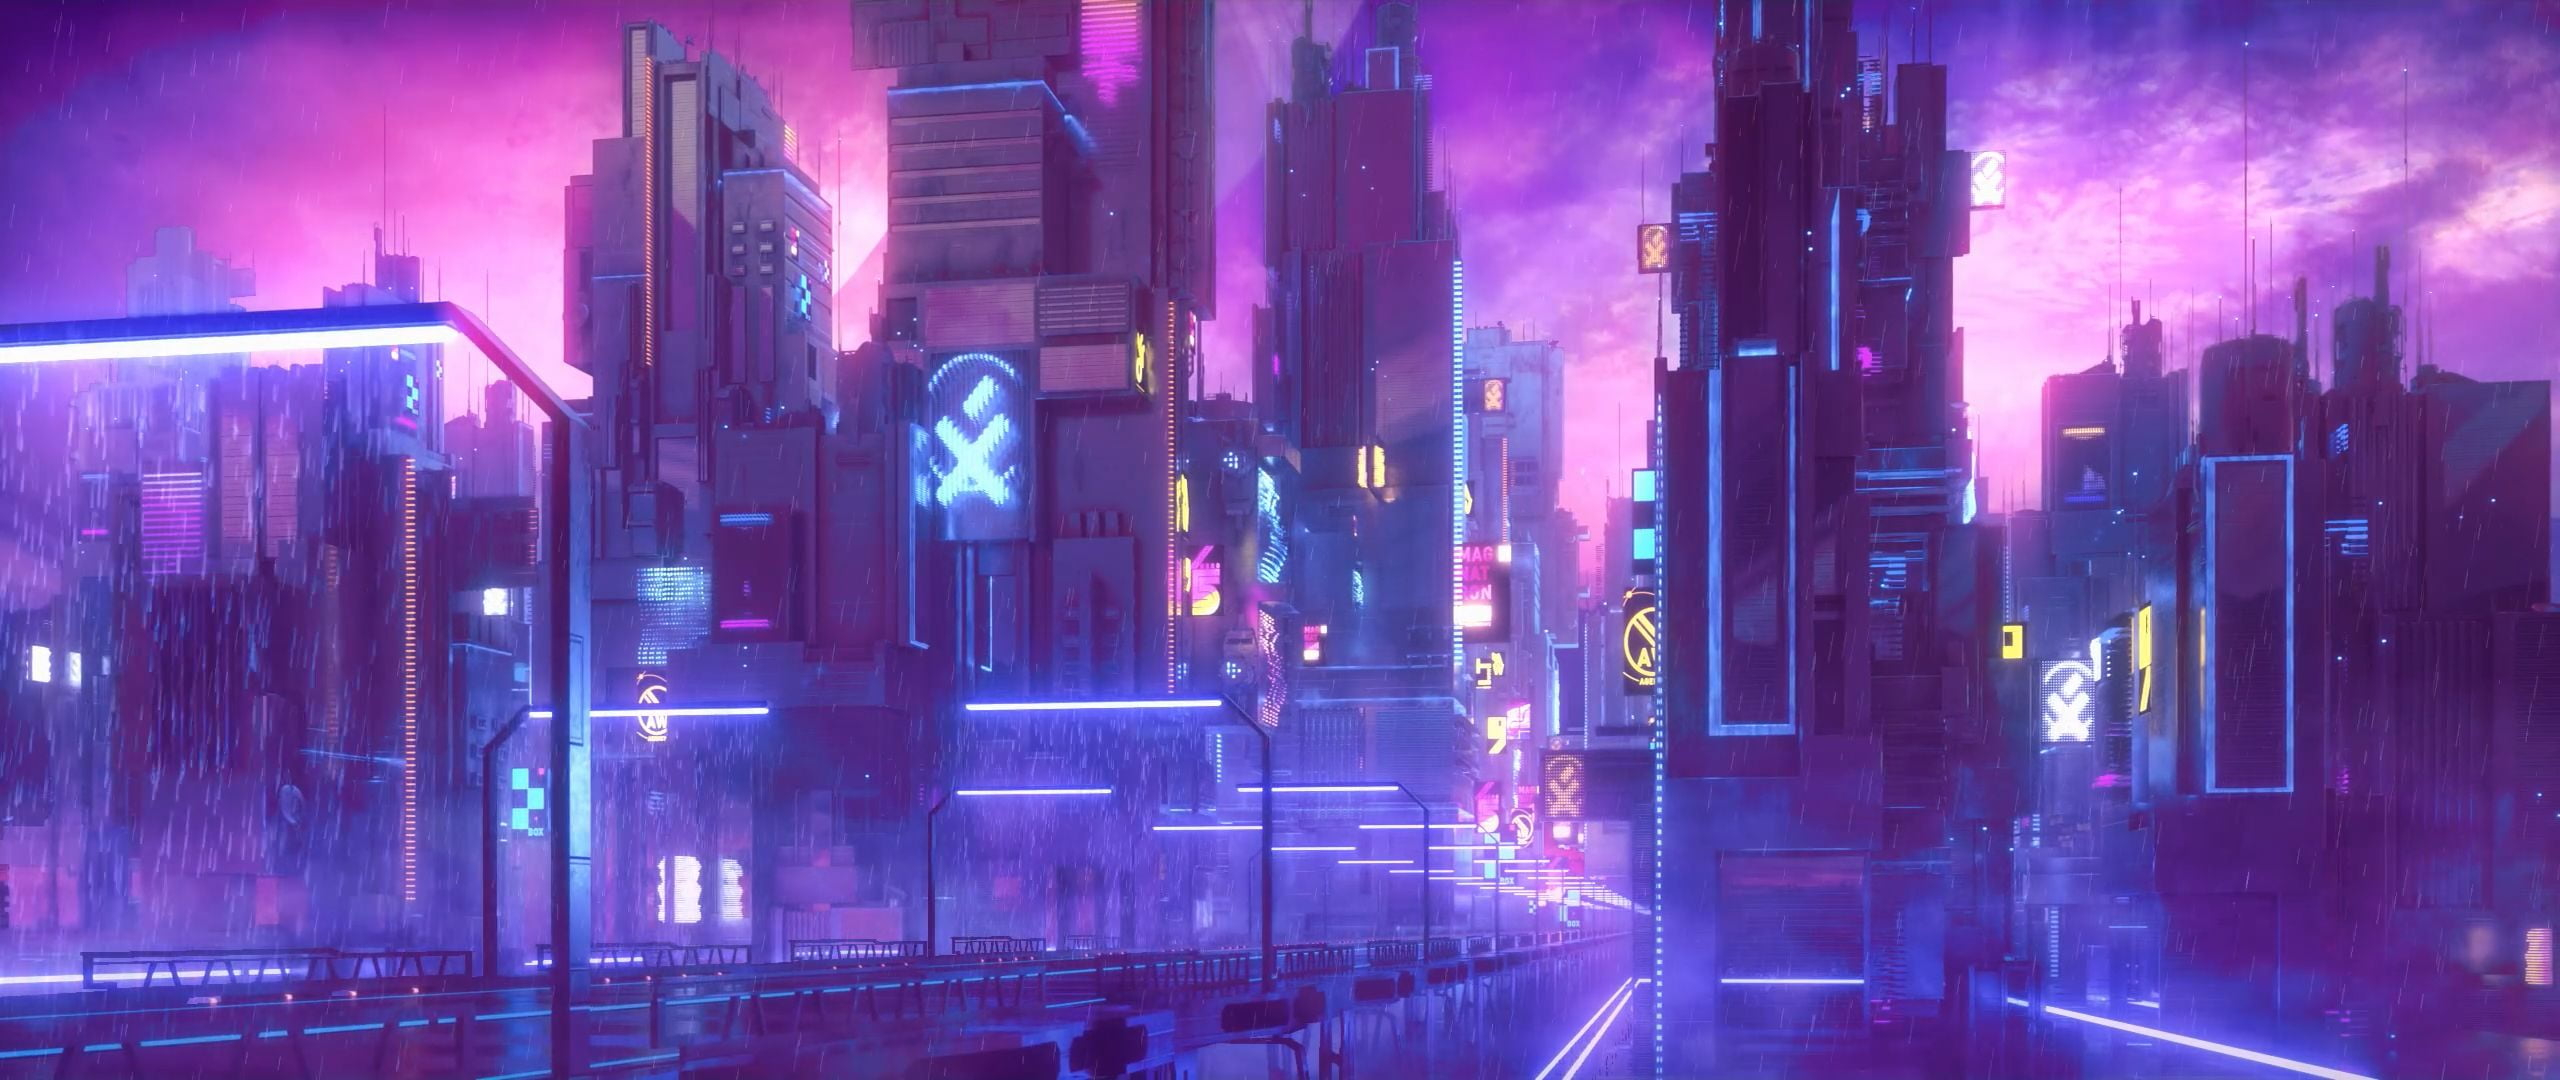 Wallpaper city animated digital wallpaper, cyberpunk, neon, night, building exterior